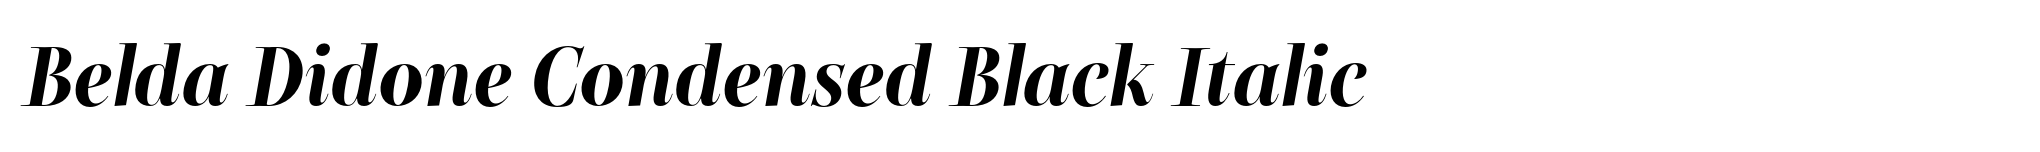 Belda Didone Condensed Black Italic image